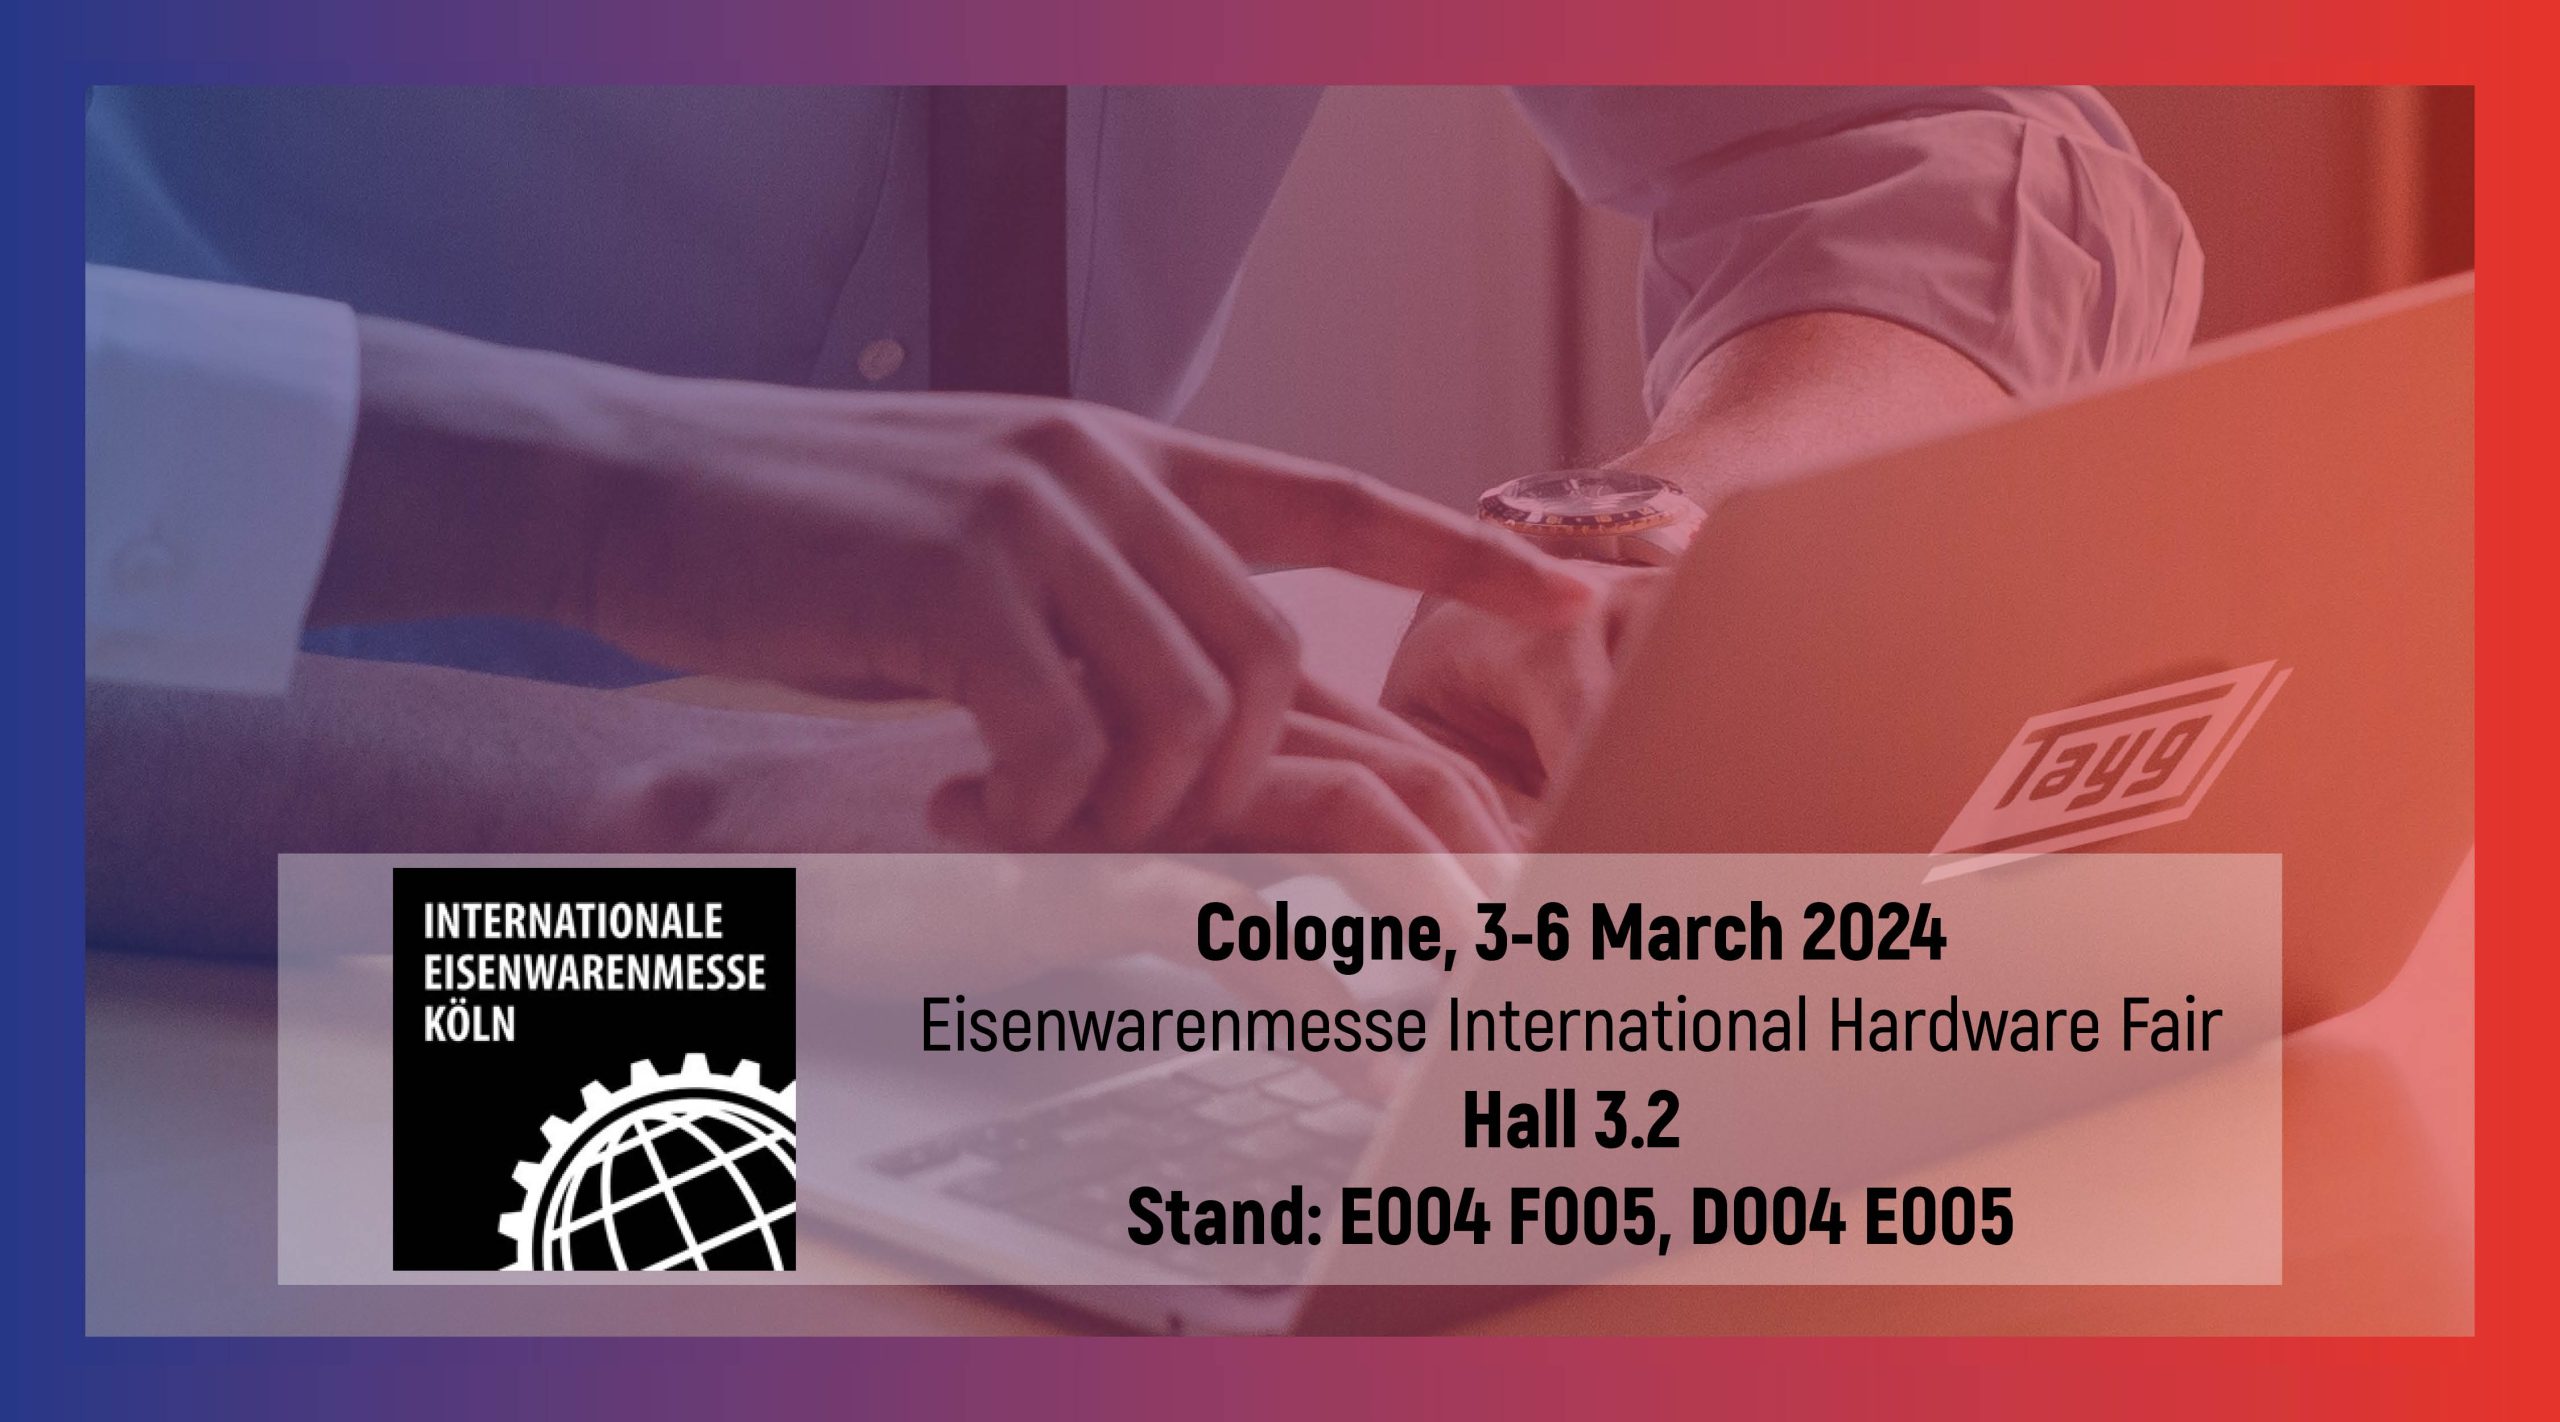 COLONIA scaled - Colonia 2024, Eisenwarenmesse International Hardware Fair